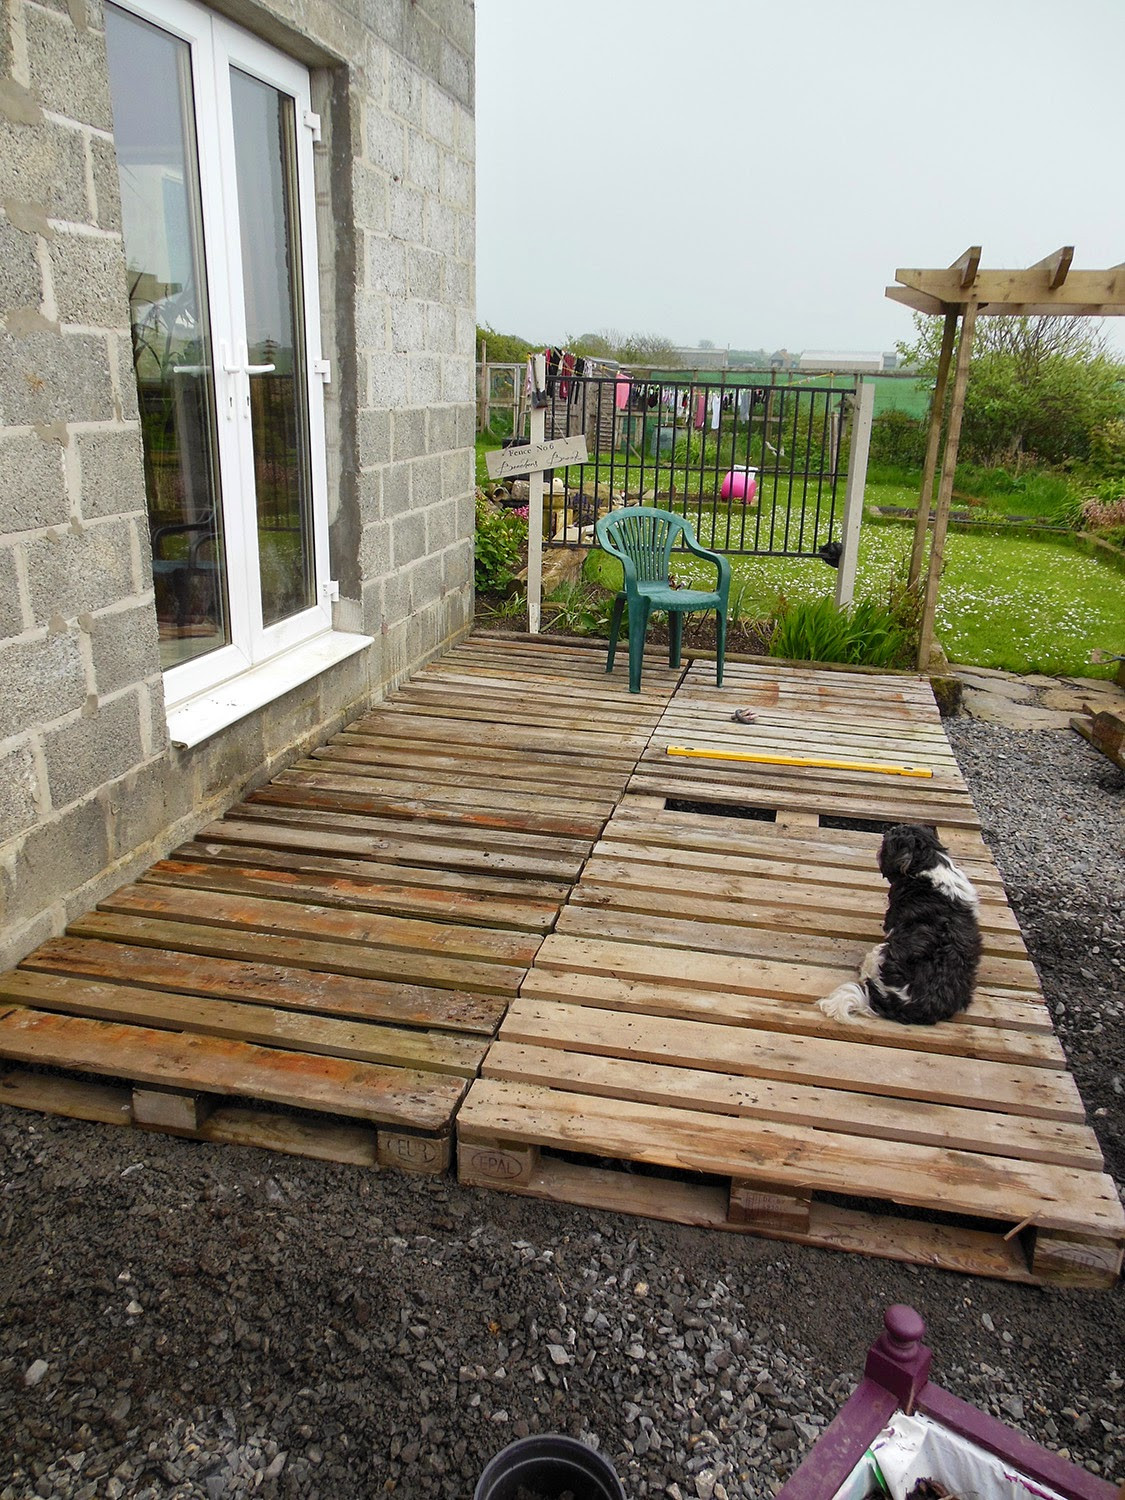 Best ideas about DIY Wood Deck
. Save or Pin The Tenacious Gardener DIY pallet wood decking Now.